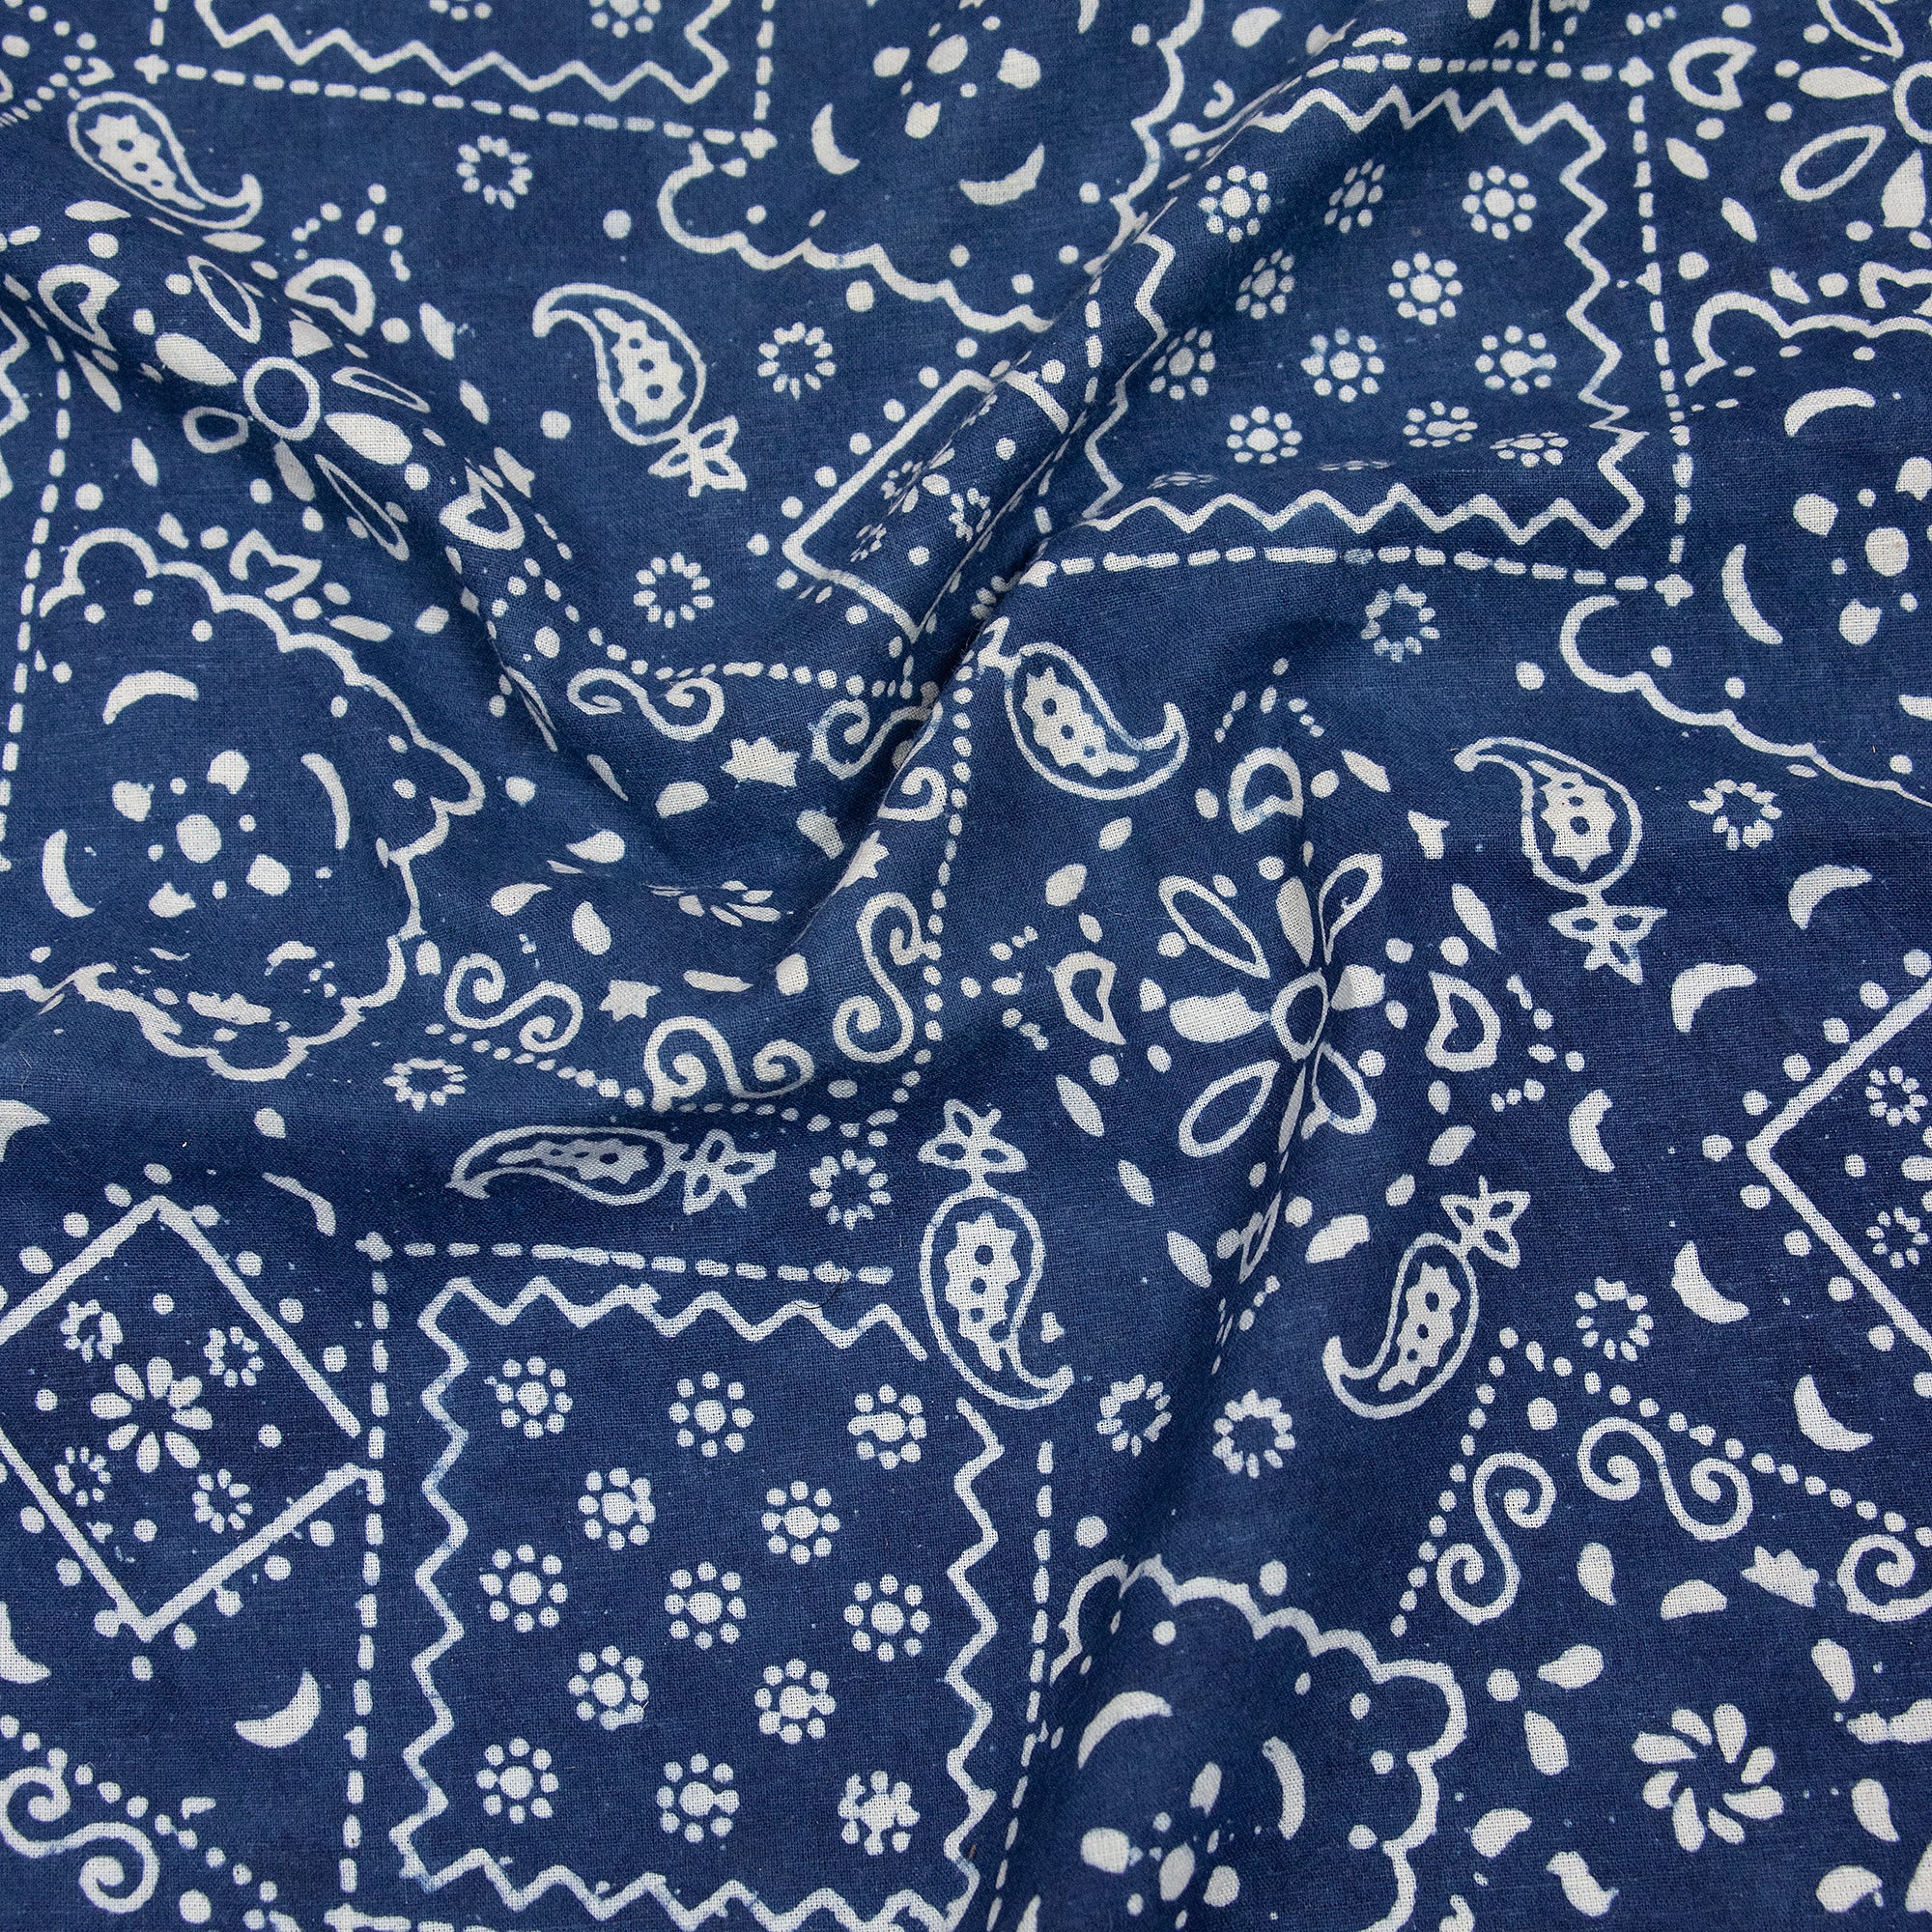 Cotton Indigo Fabric Blue Square Printed